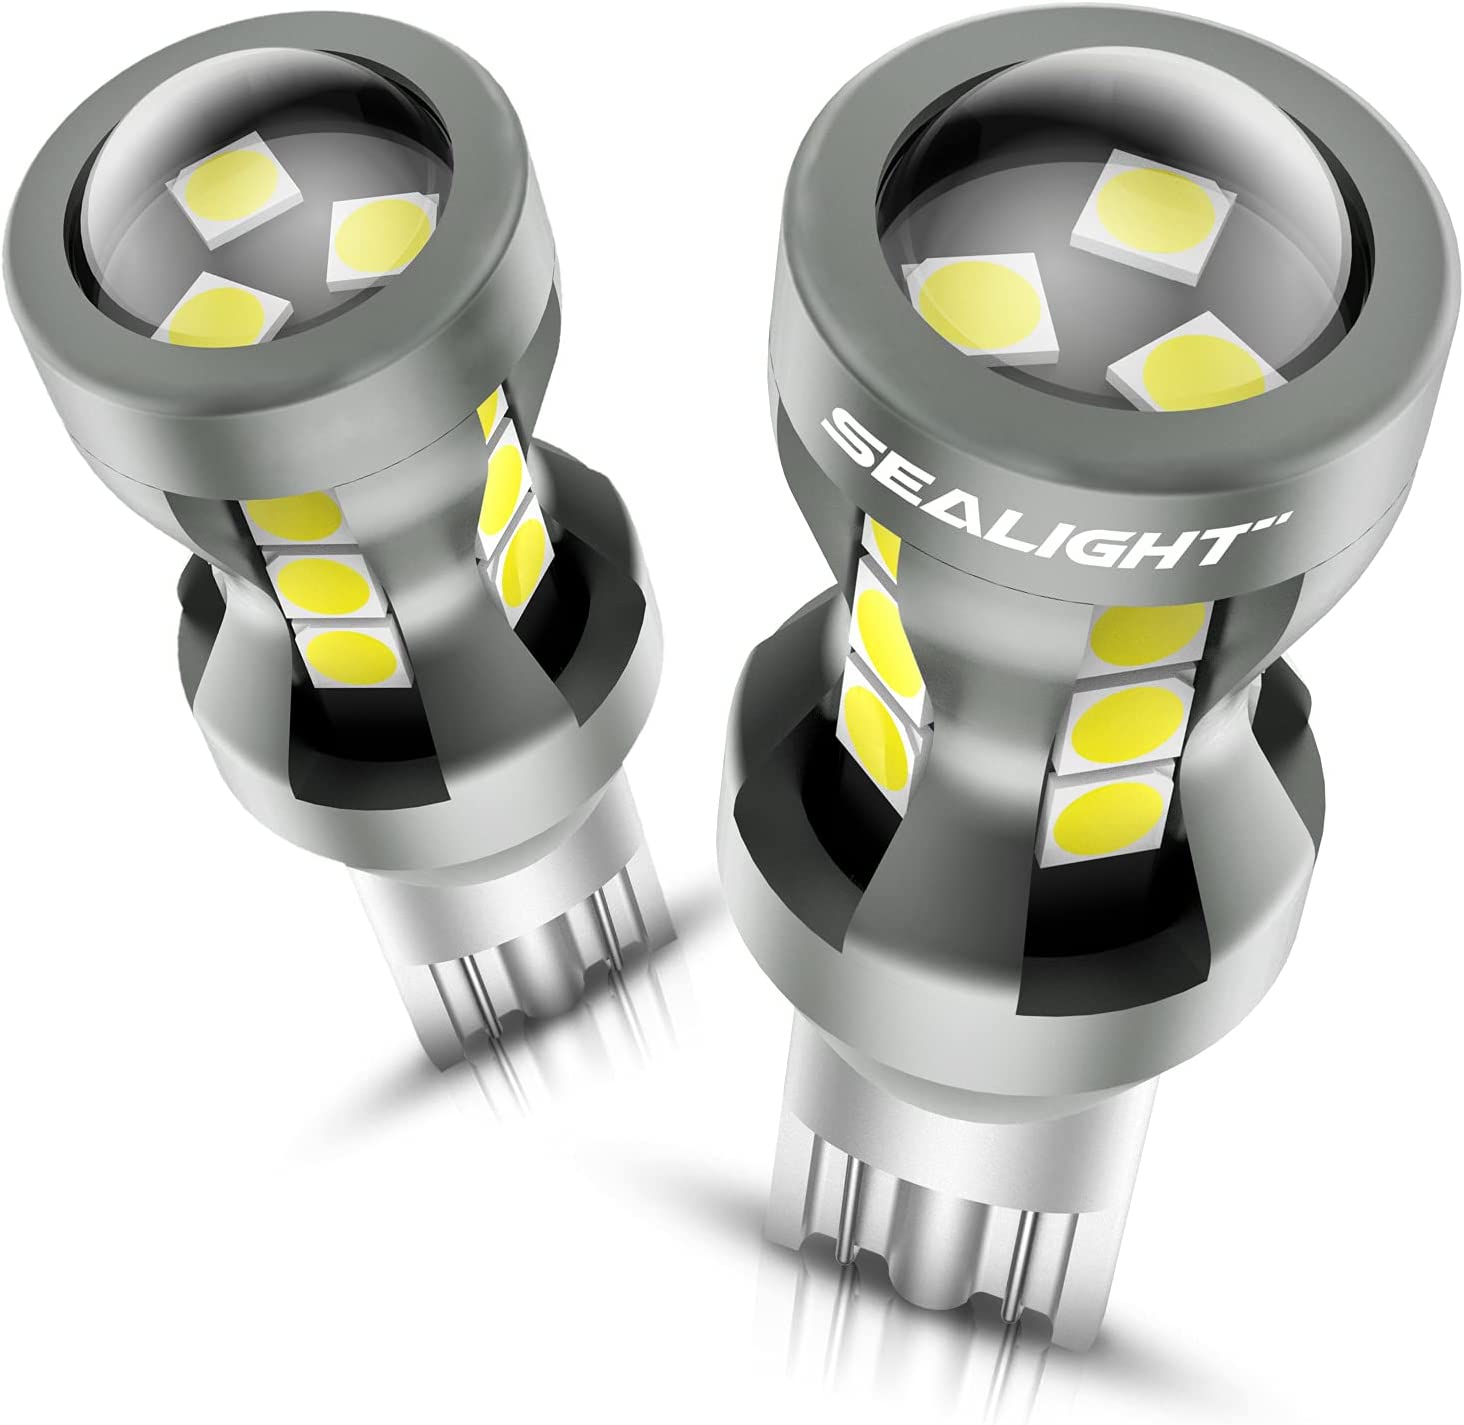 Image of Sealight Brightest 921 LED bulb